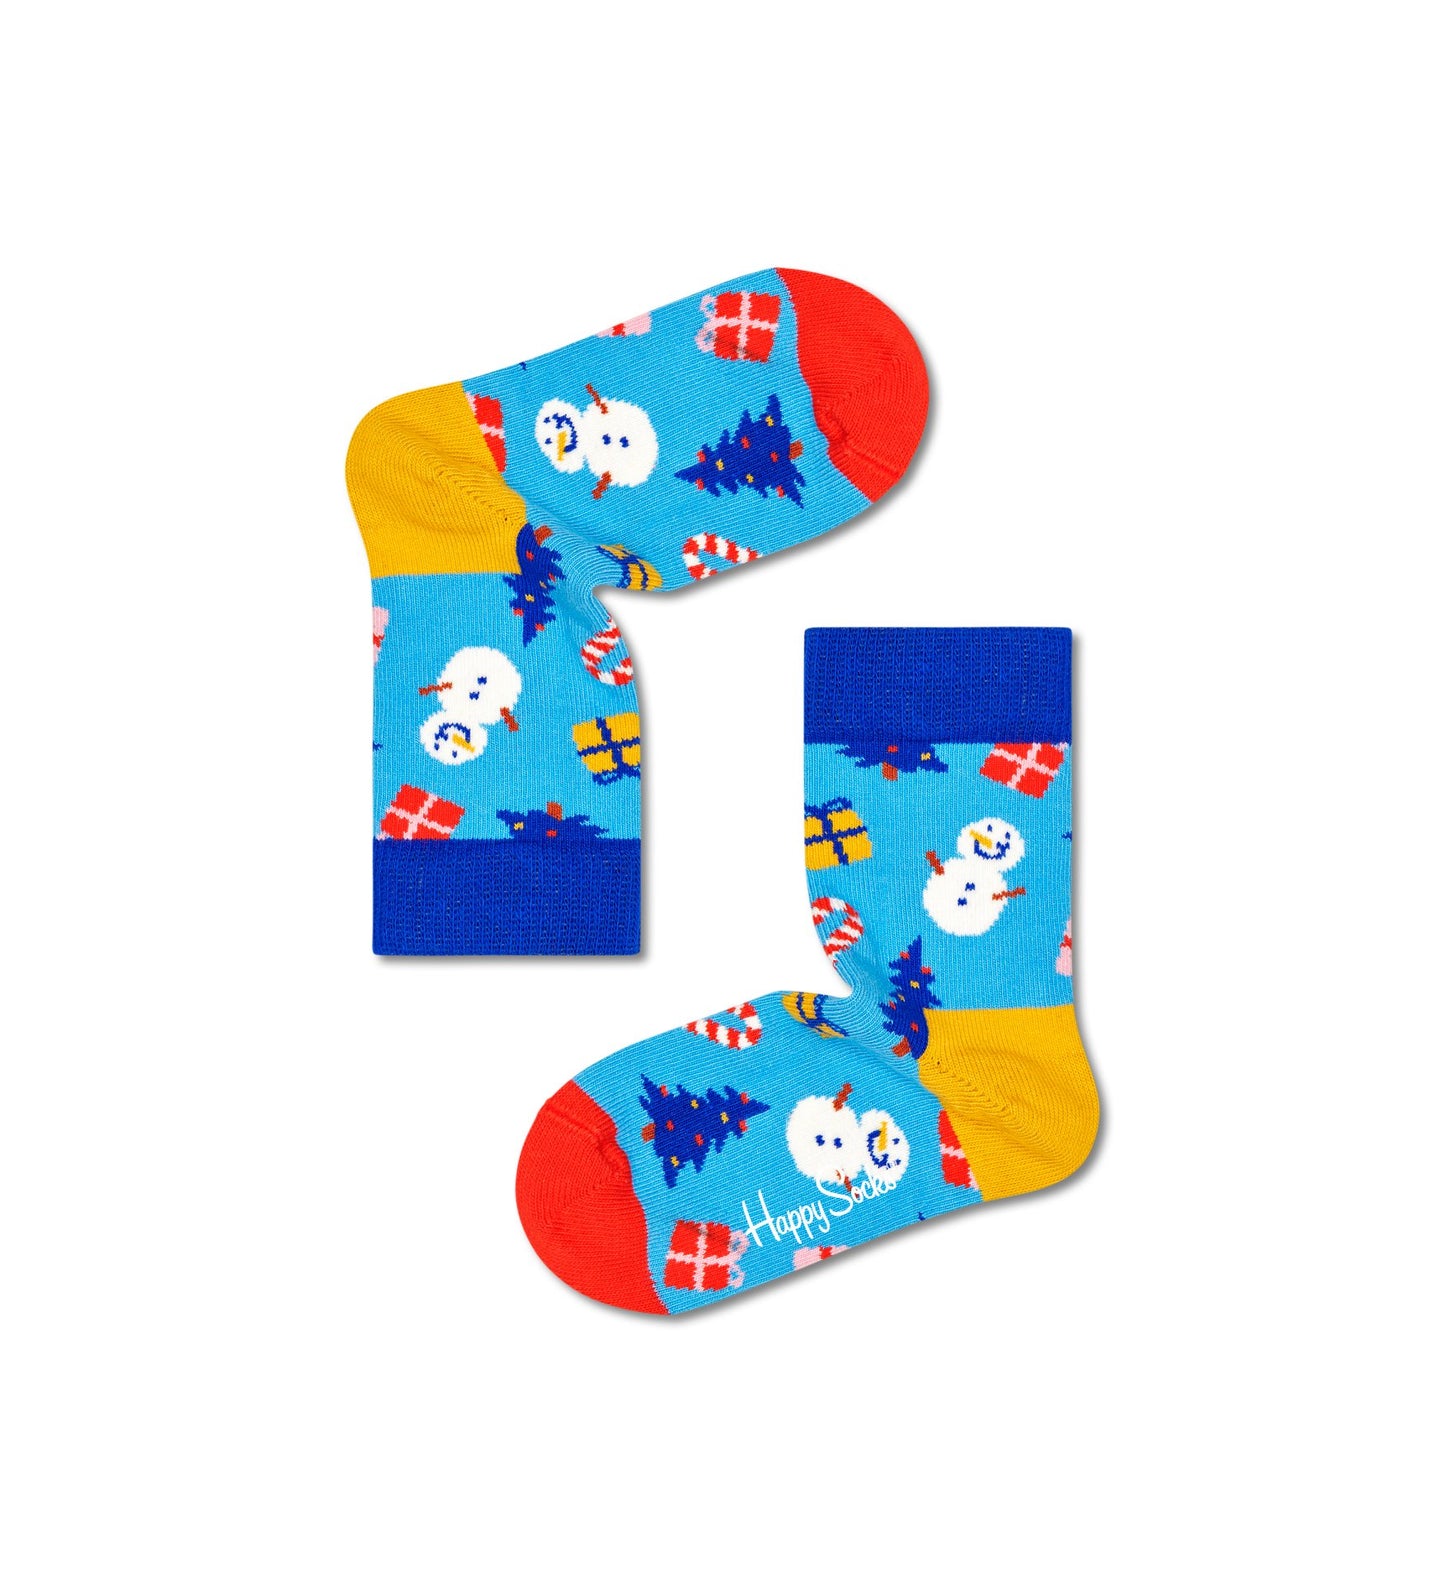 Happy Socks 2-pack ornament box gift set